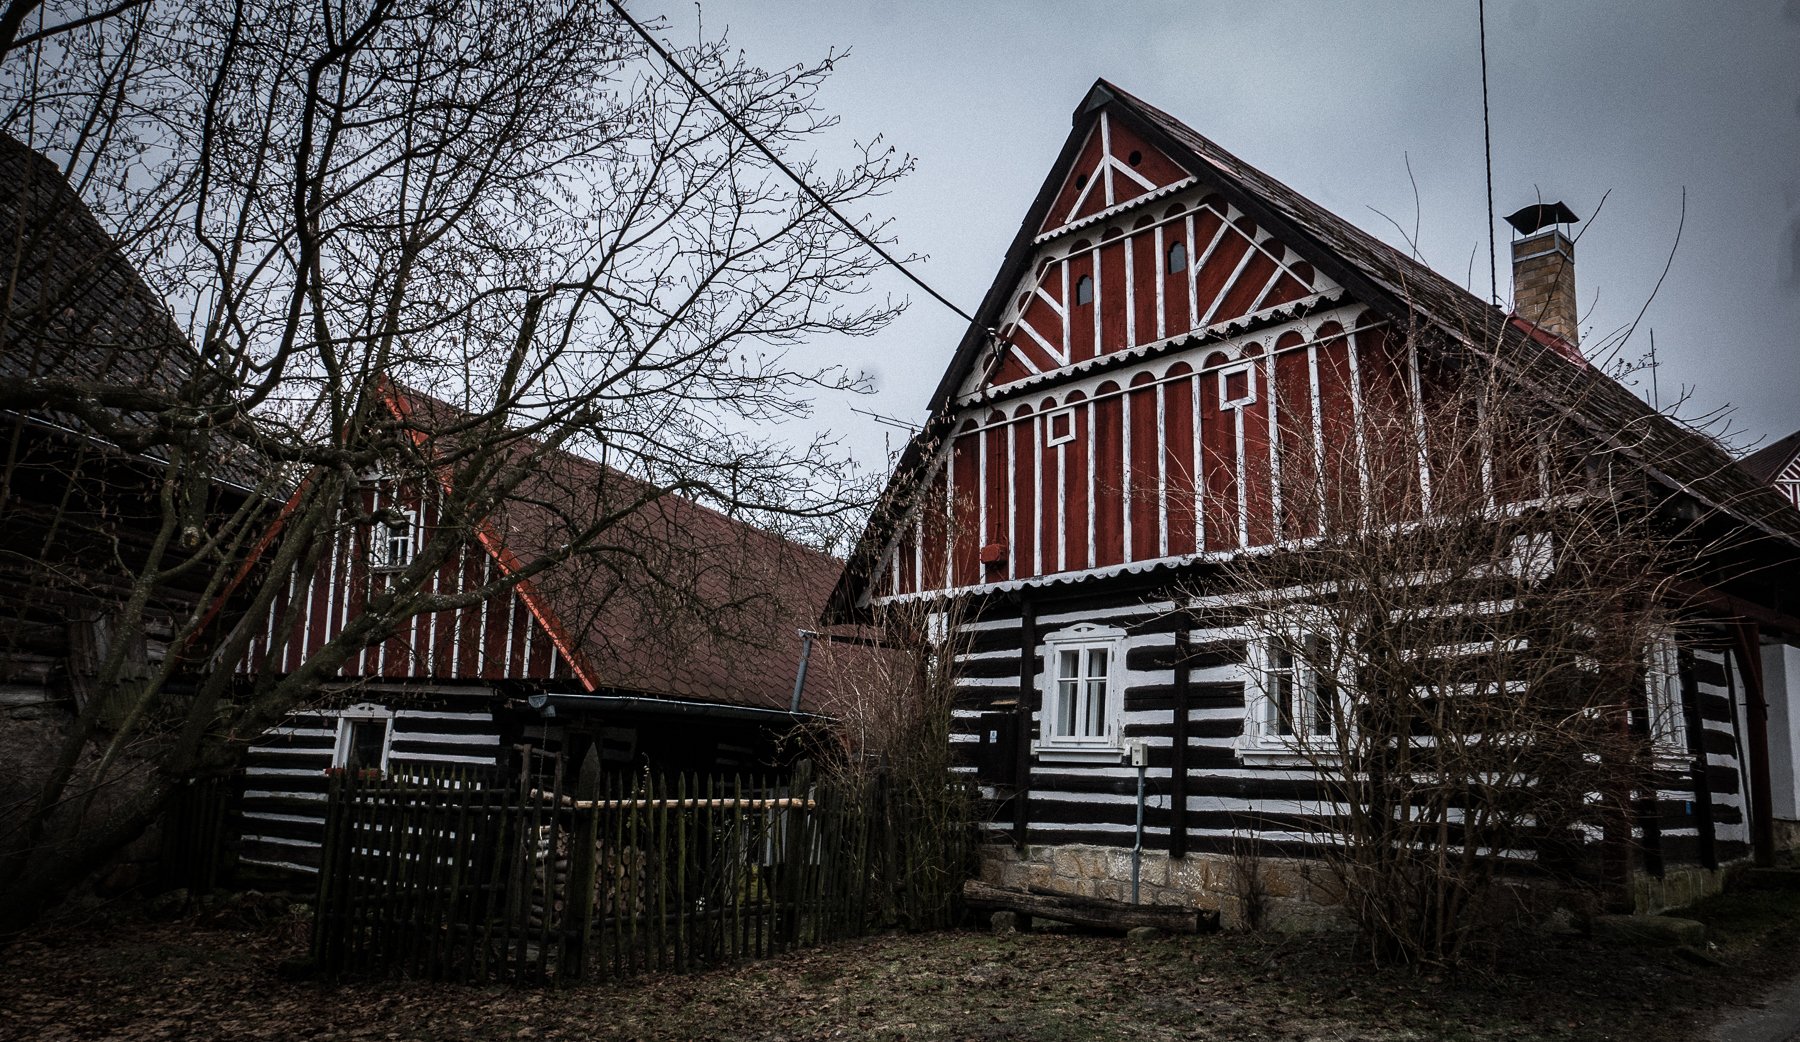 Winter photo workshop in Bohemia. Mala skala wooden dwelling